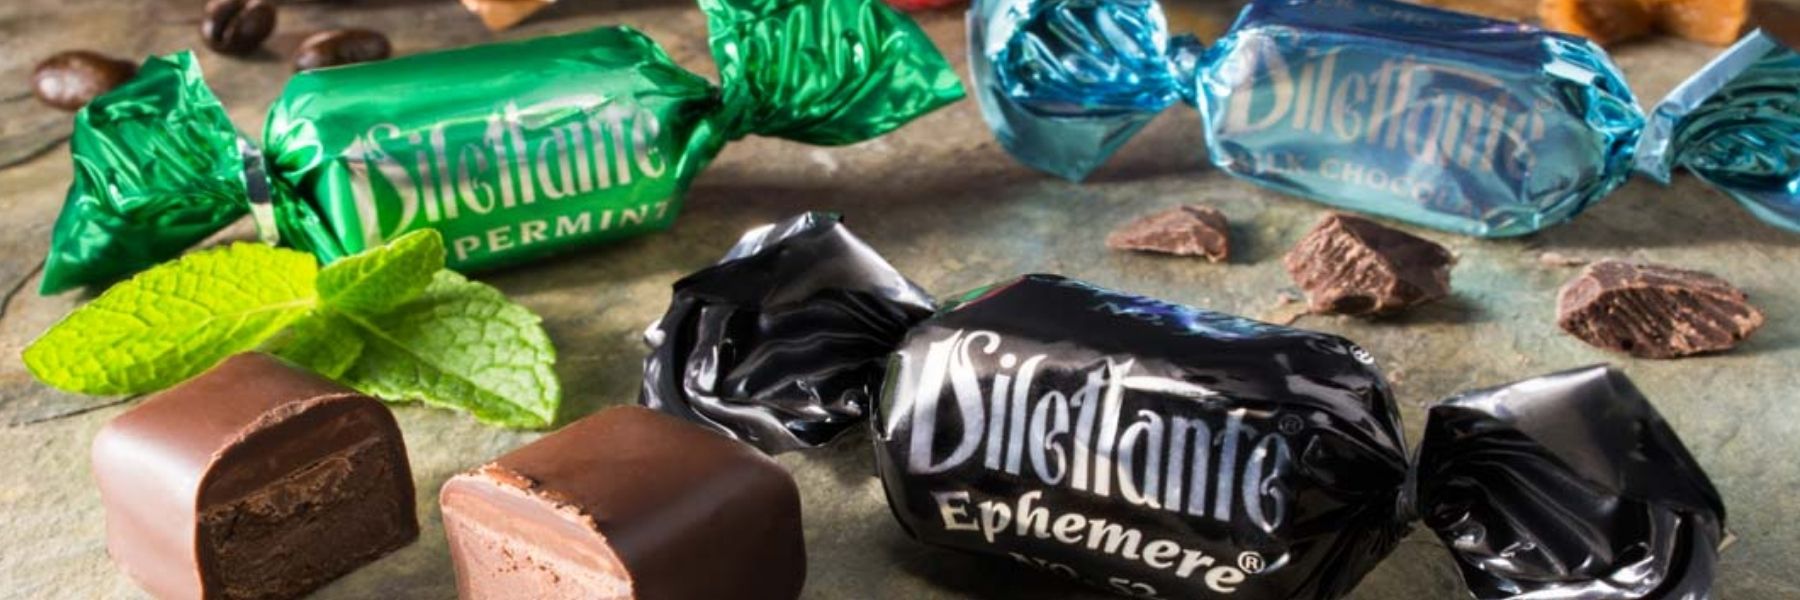 Dilettante Chocolates New TruffleCreme Assortments Featuring Peppermint, Ephemere, and Blood Orange